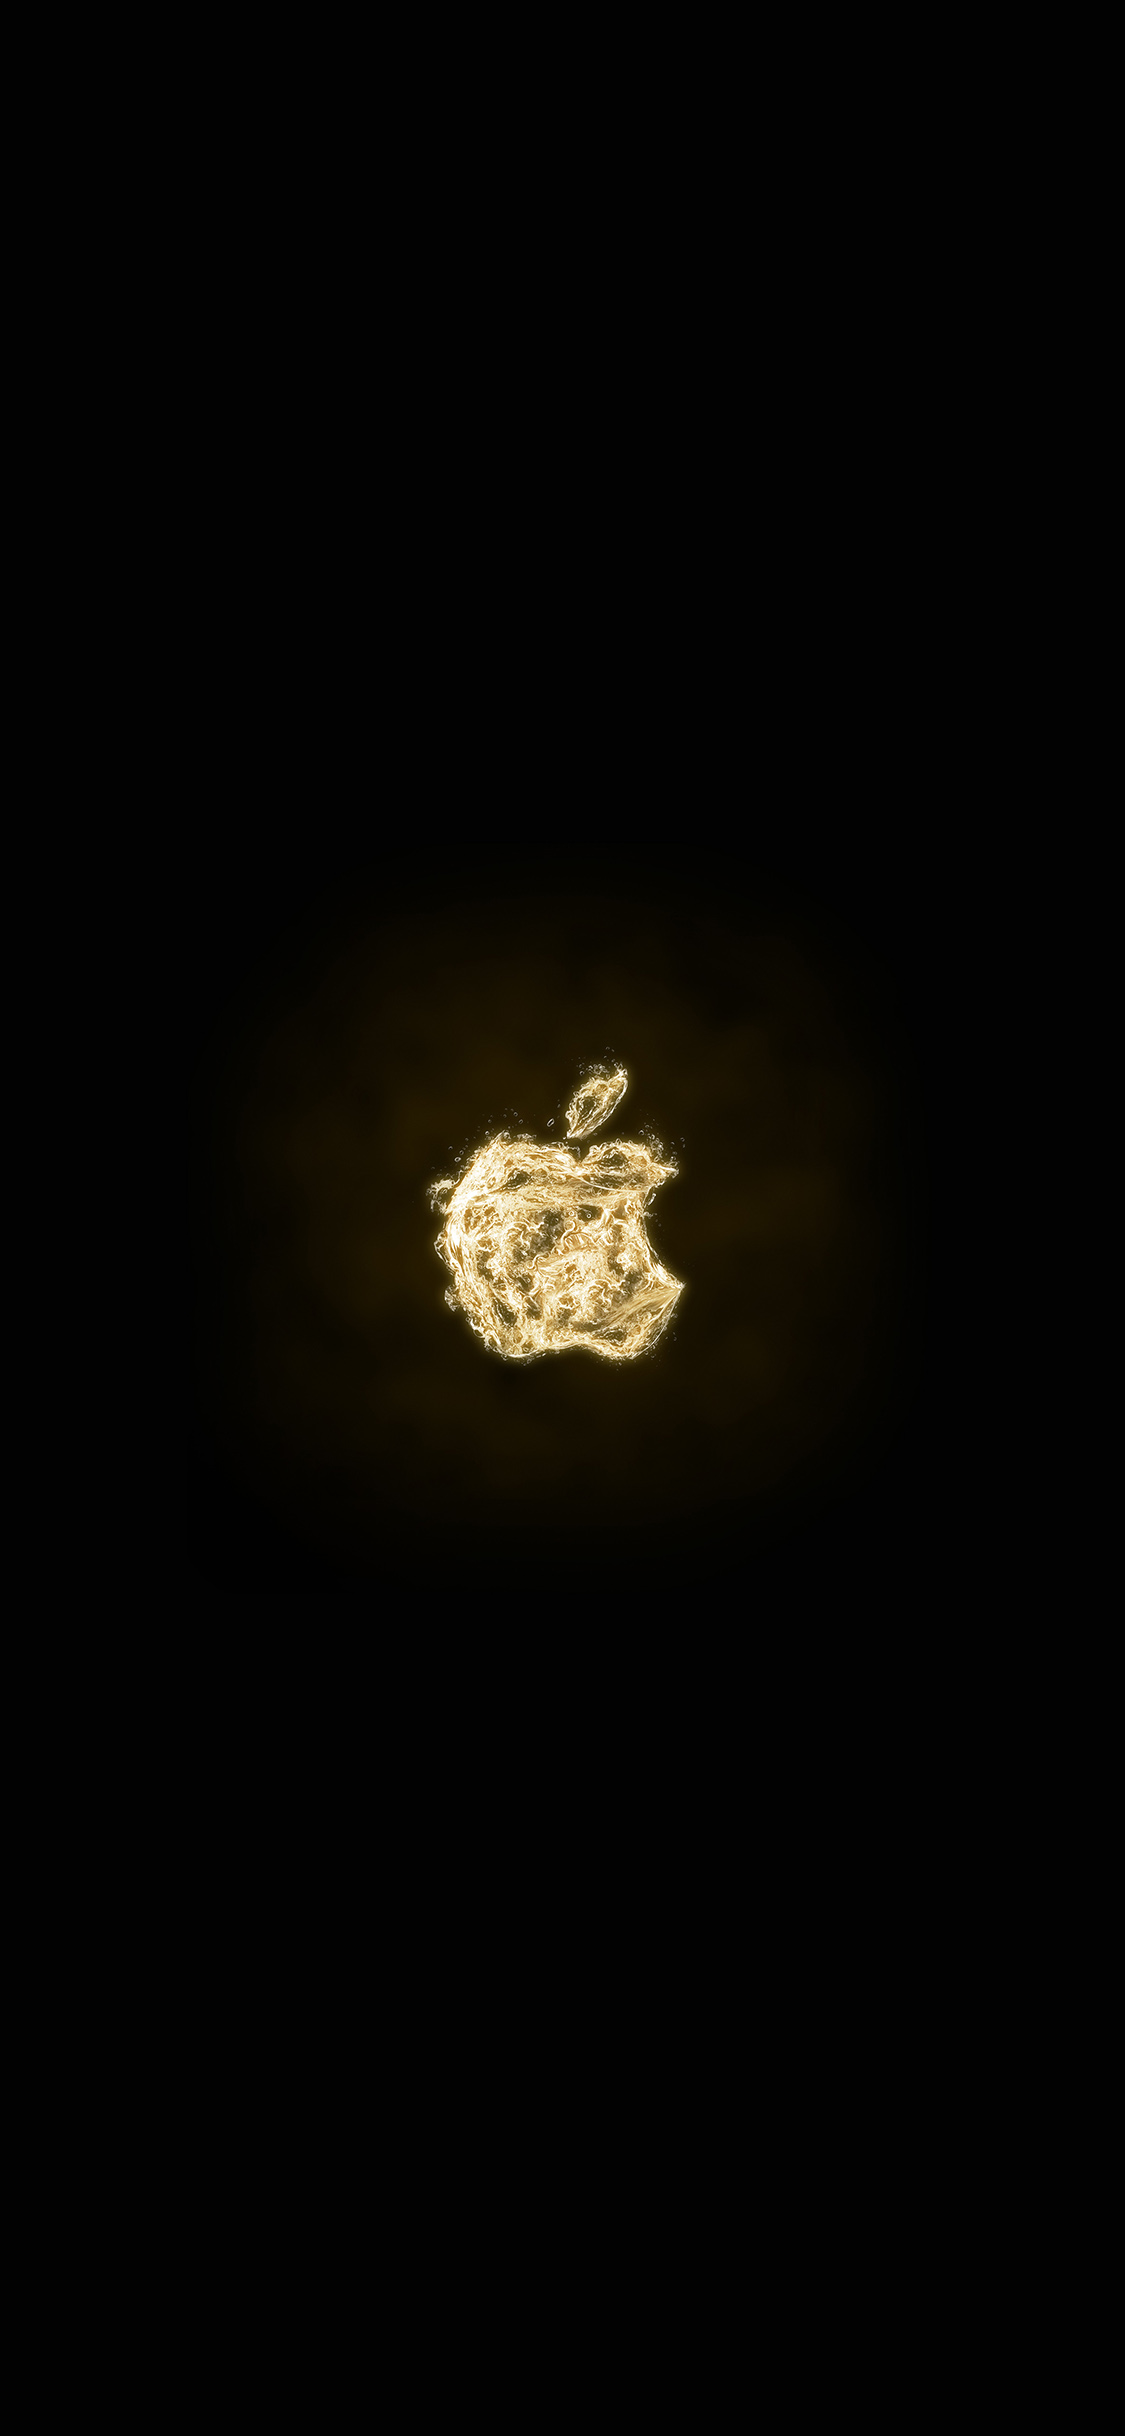 iPhone X wallpaper. apple logo dark water gold art illustration